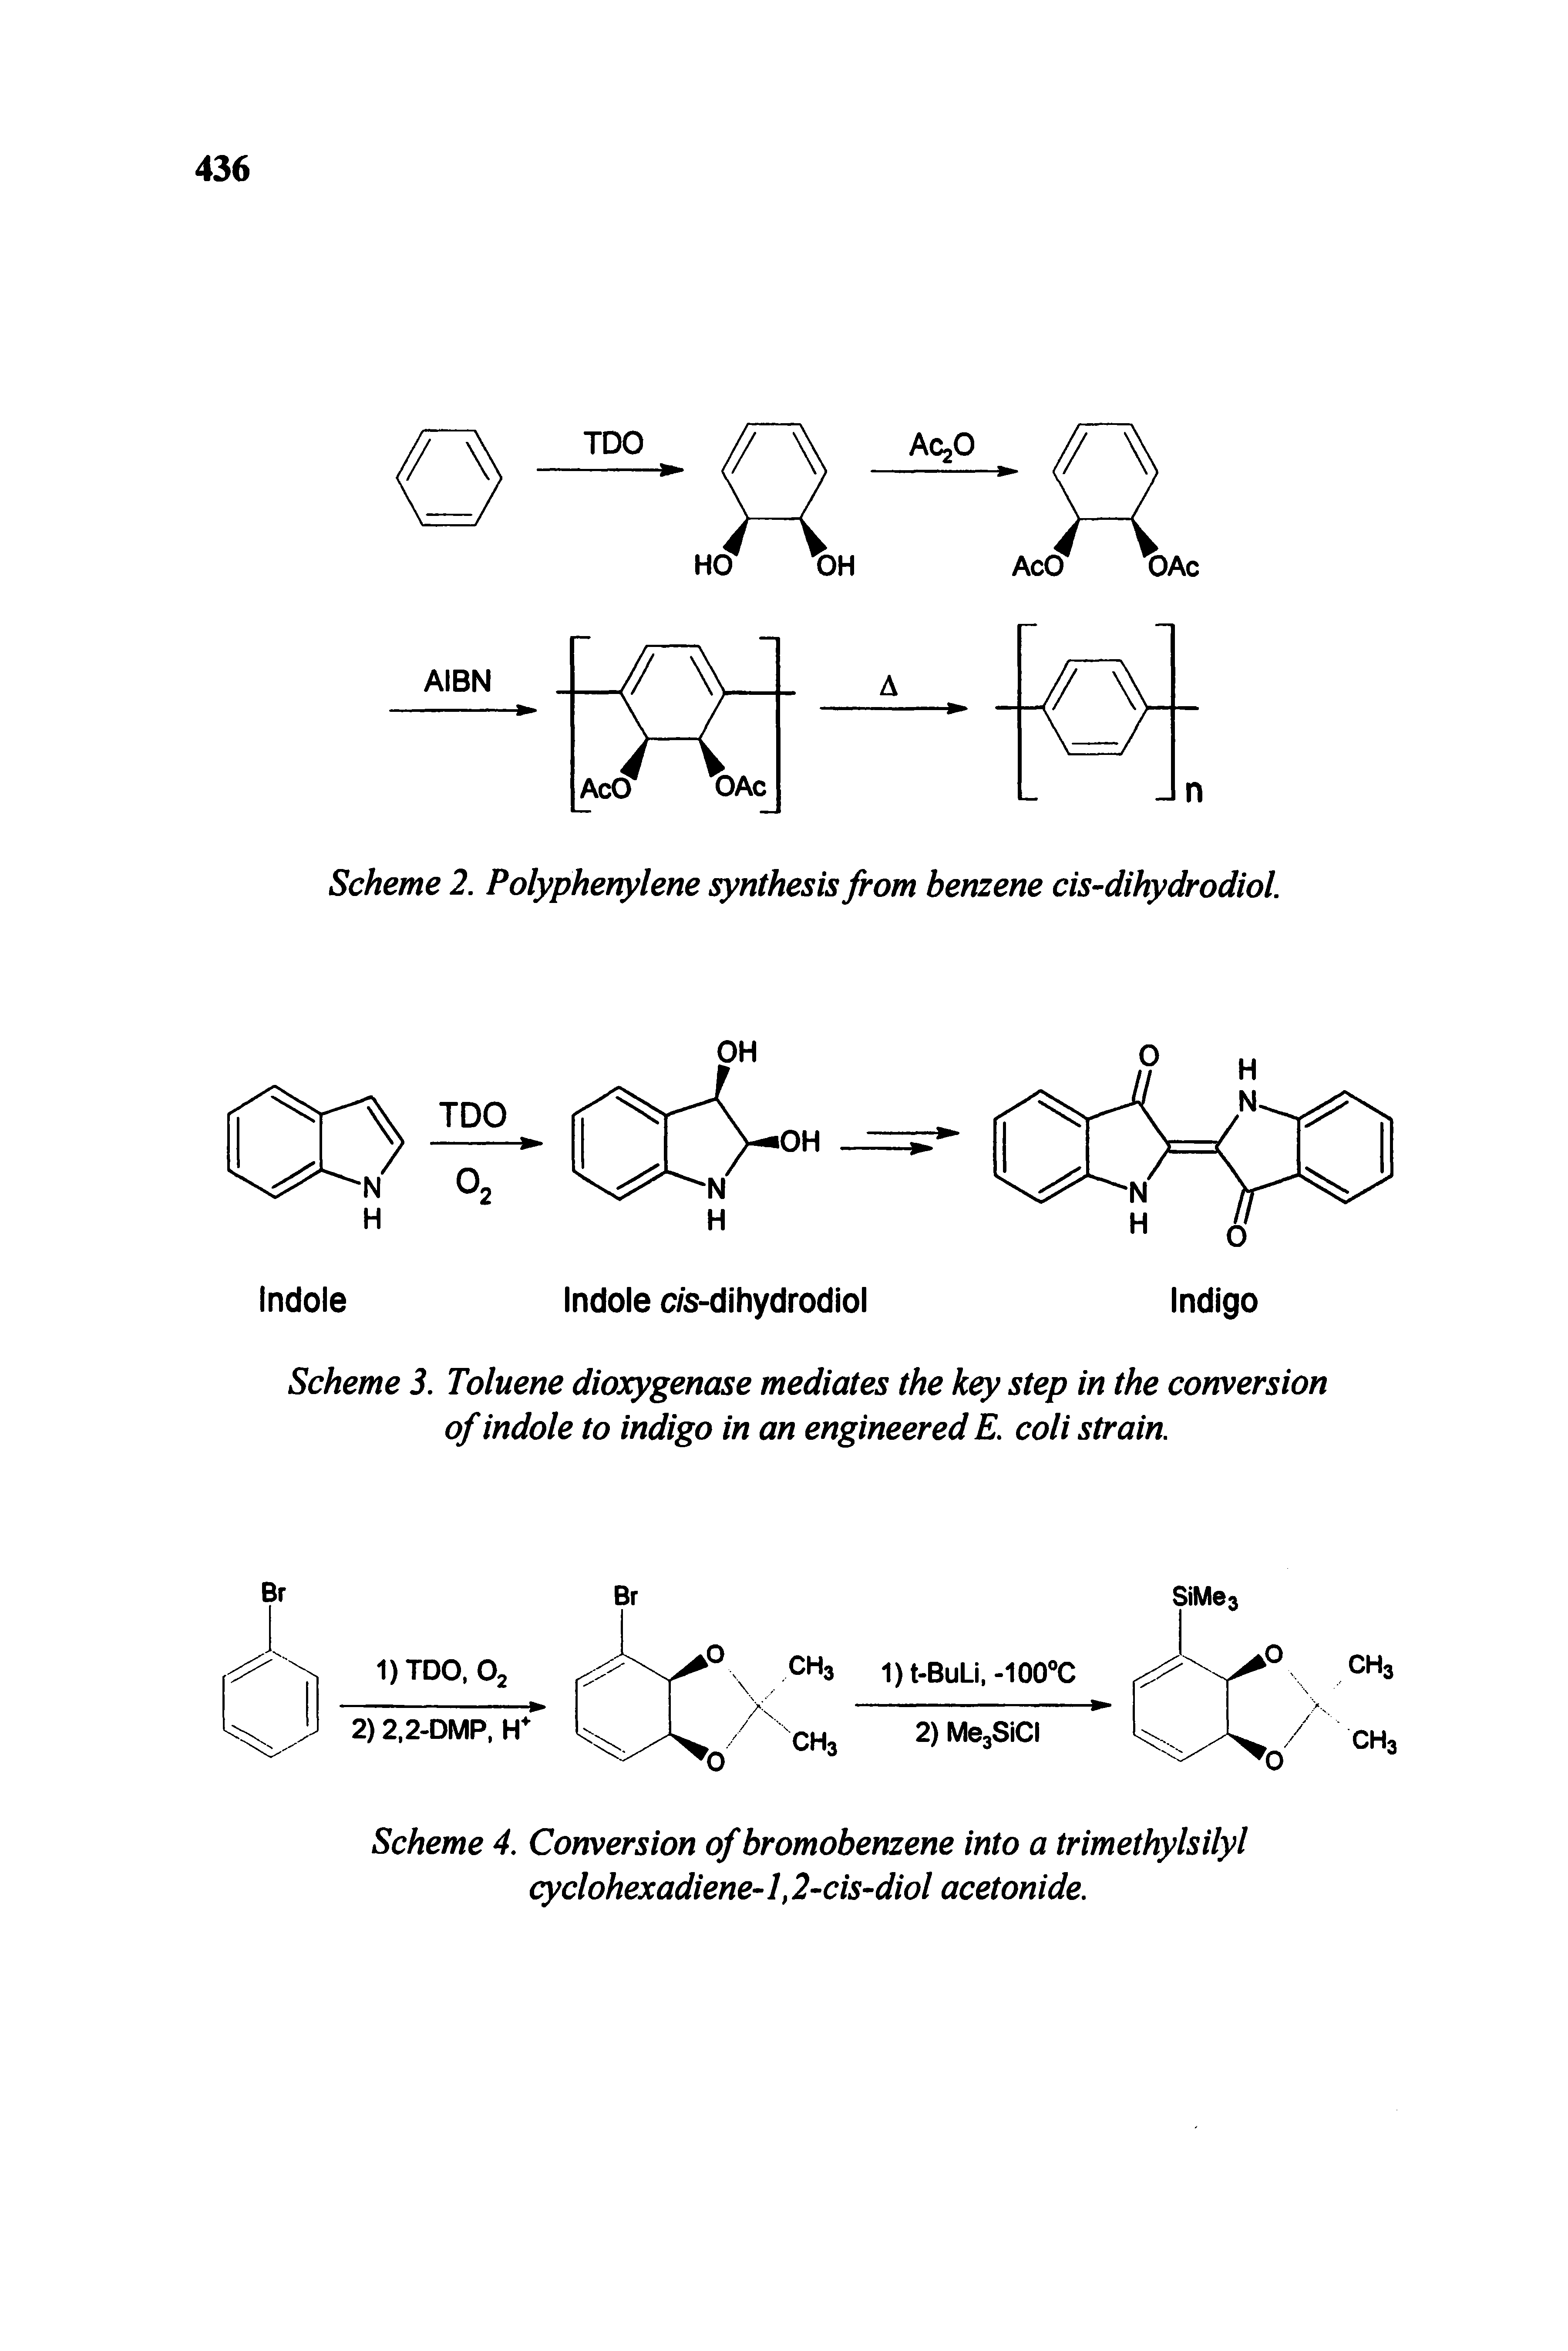 Scheme 4, Conversion ofbromobenzene into a trimethylsilyl cyclohexadiene-1,2-cis-diol acetonide.